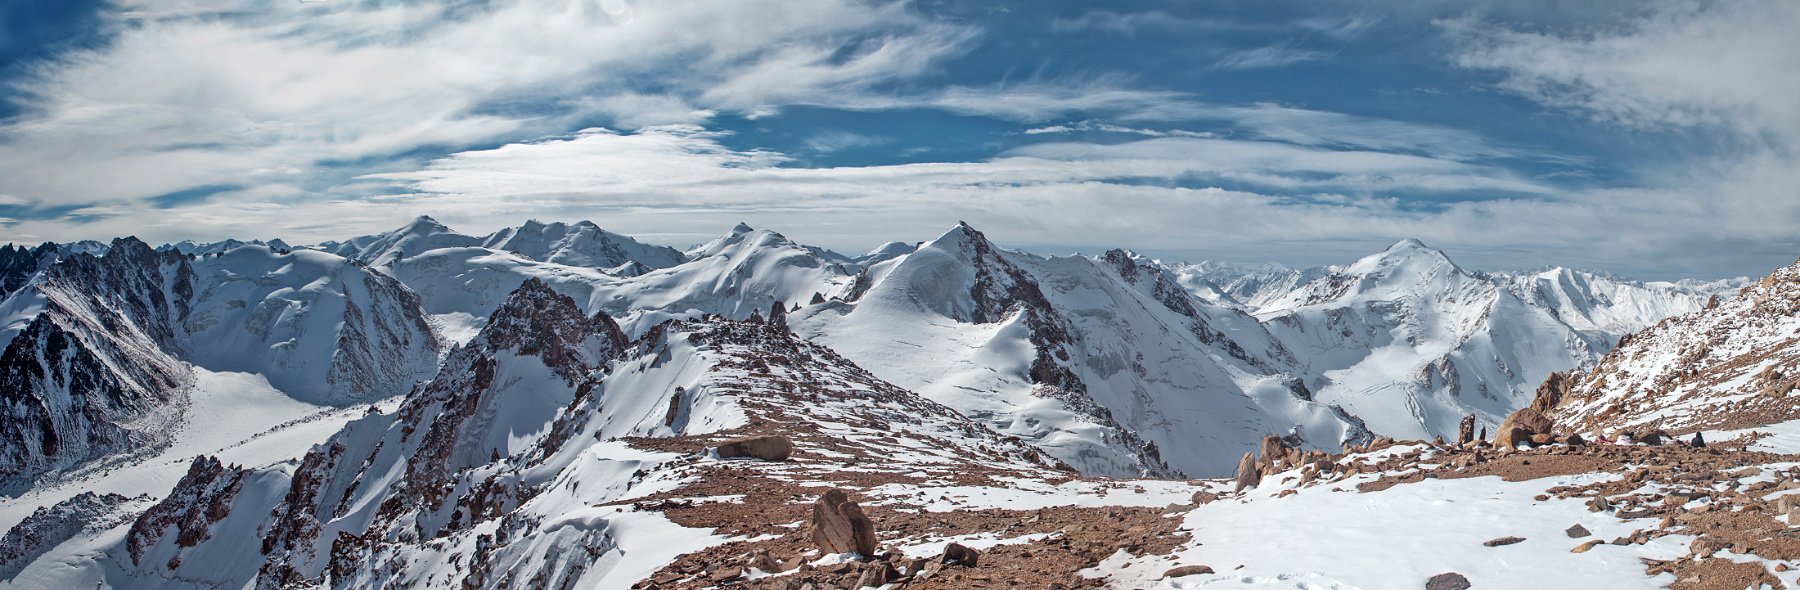 Almaty, Climb, Climbing, Clouds, Glacier, Hiking, Ice, Kazakhstan, Mountains, Peaks, Rocks, Sky, Snow, Summits, Anton Akhmatov